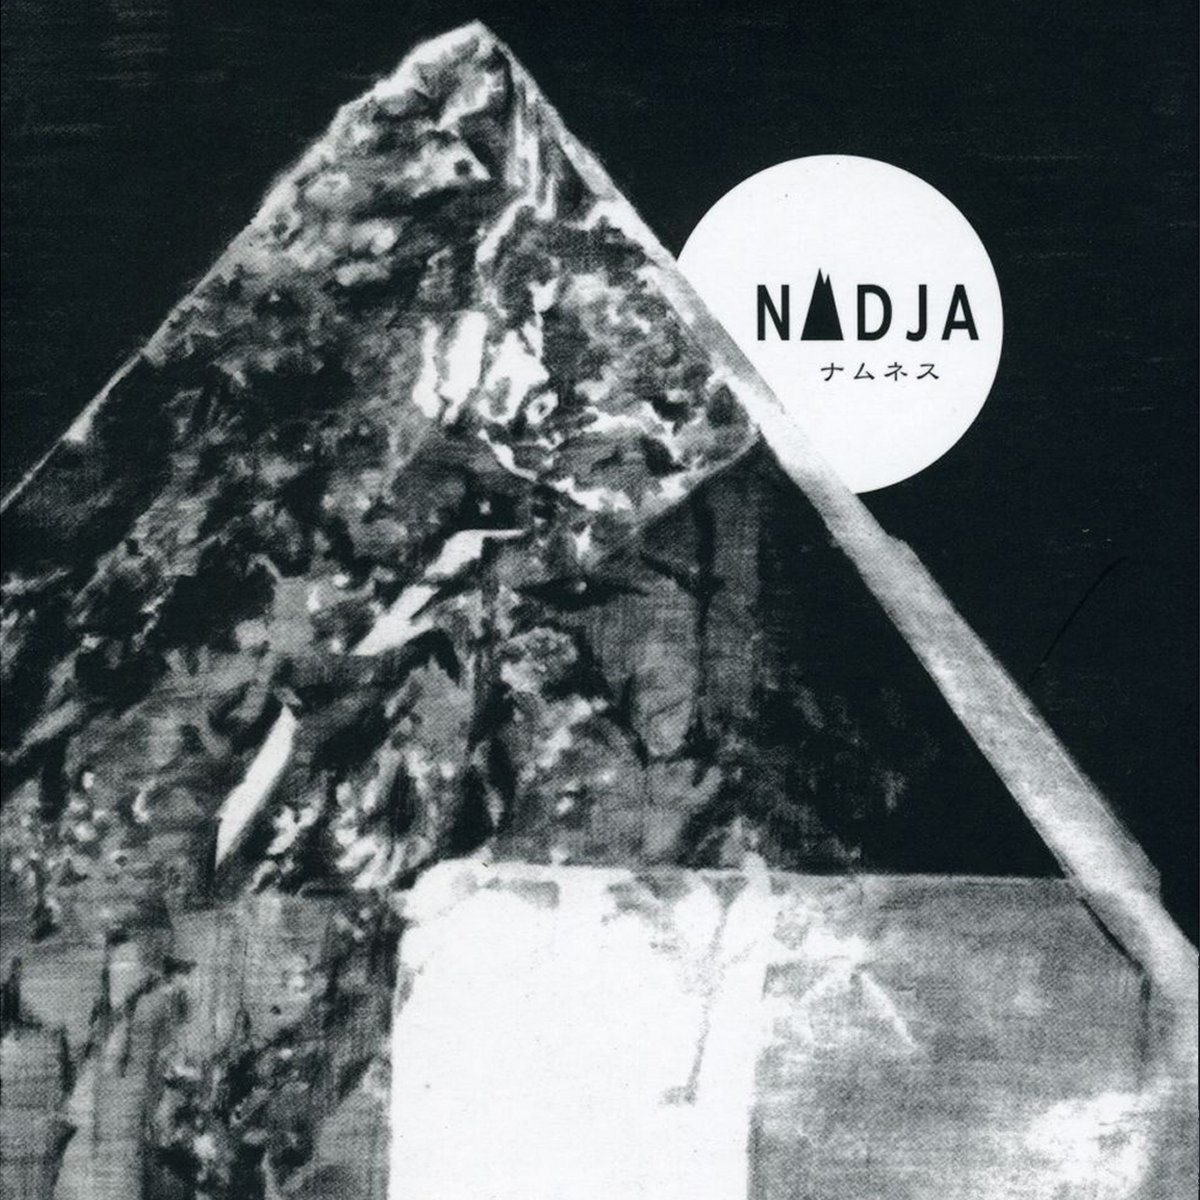 Album of the day:

Nadja - Numbness (2009)

#DroneDoomMetal #DroneDoom #DroneMetal #AmbientMetal #Ambient #Experimental #ExperimentalMusic #DoomMetal #Drone #Doom #UndergroundMetal #UndergroundMusic #ExperimentalMetal